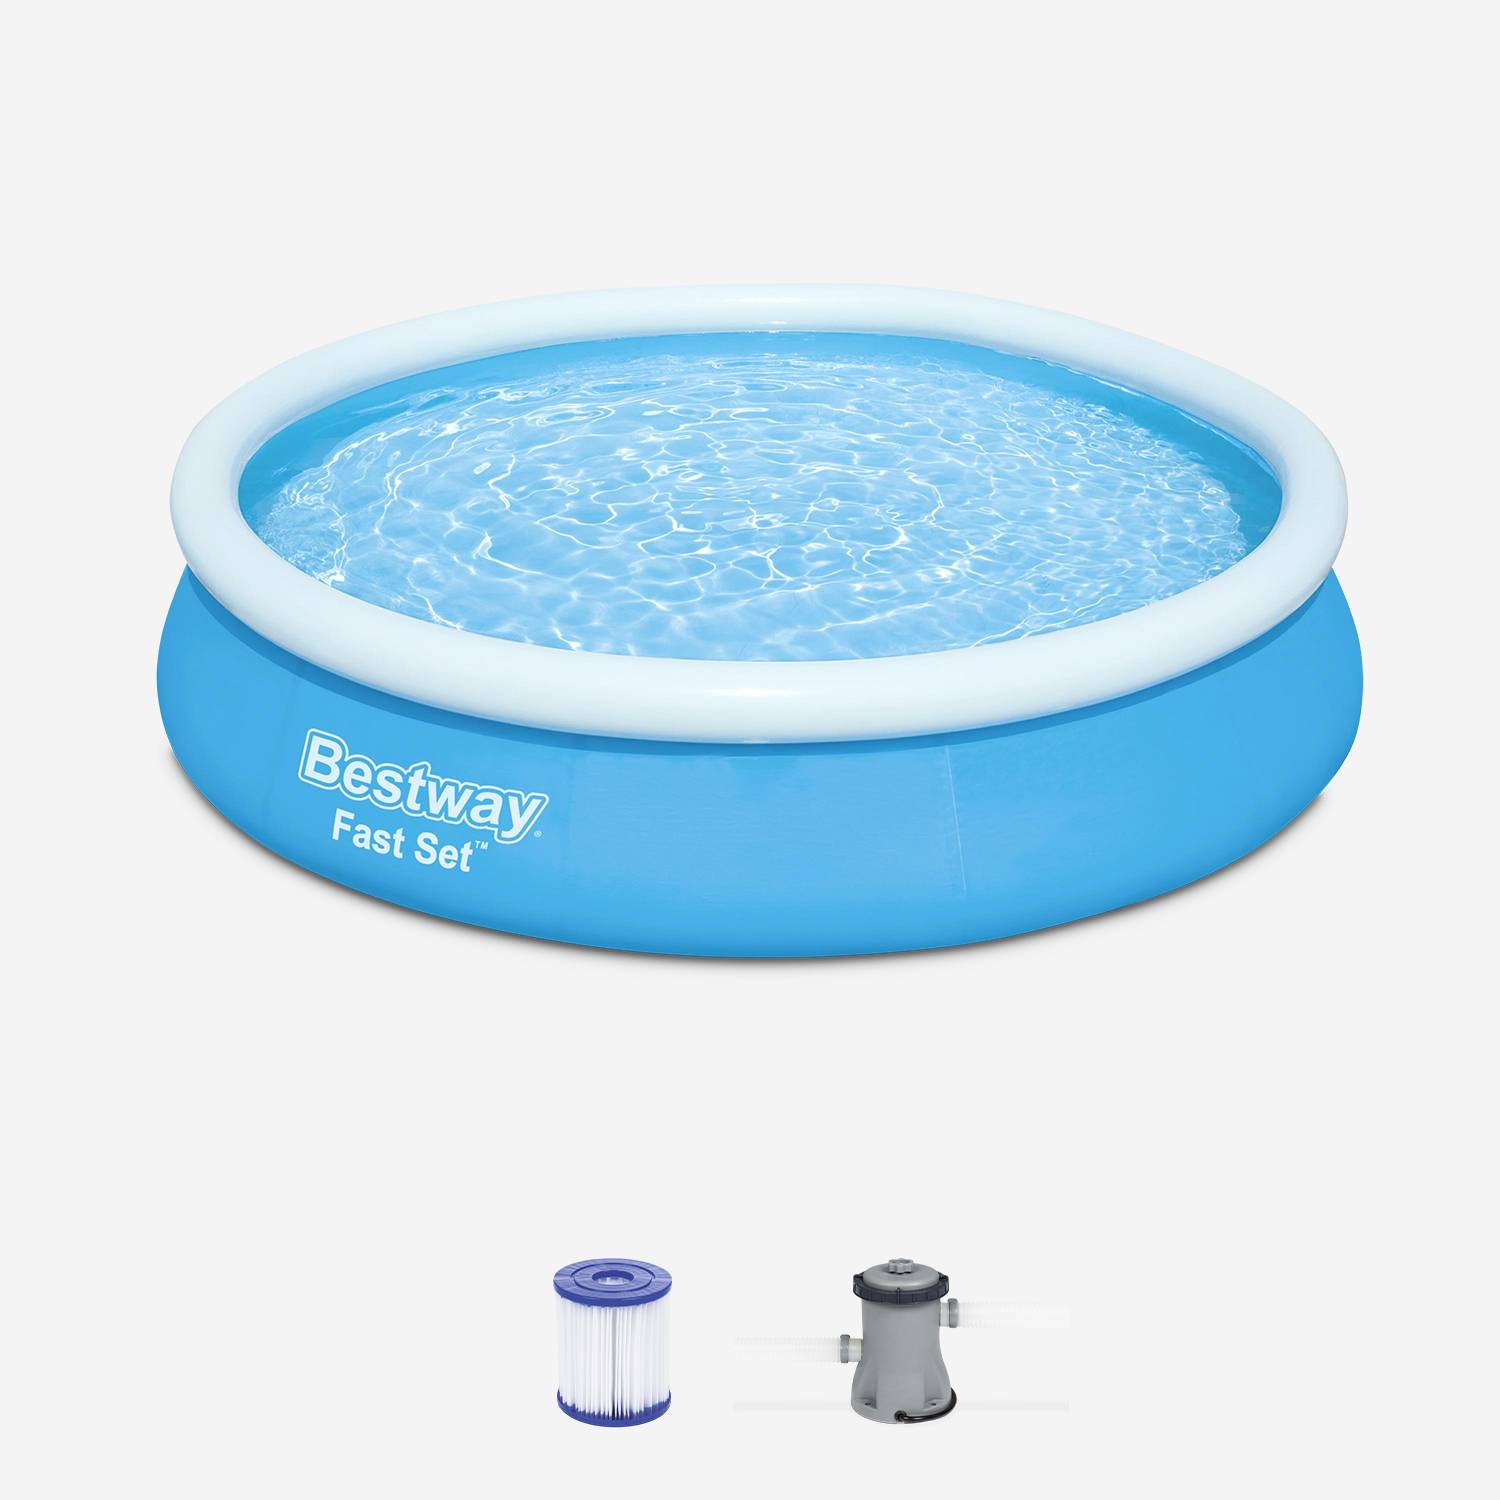 BESTWAY piscina gonfiabile autoportante blu - Jade ⌀ 360 x 76 cm - piscina fuori terra rotonda autoportante con filtro a cartuccia  + 1 cartuccia inclusa Photo1